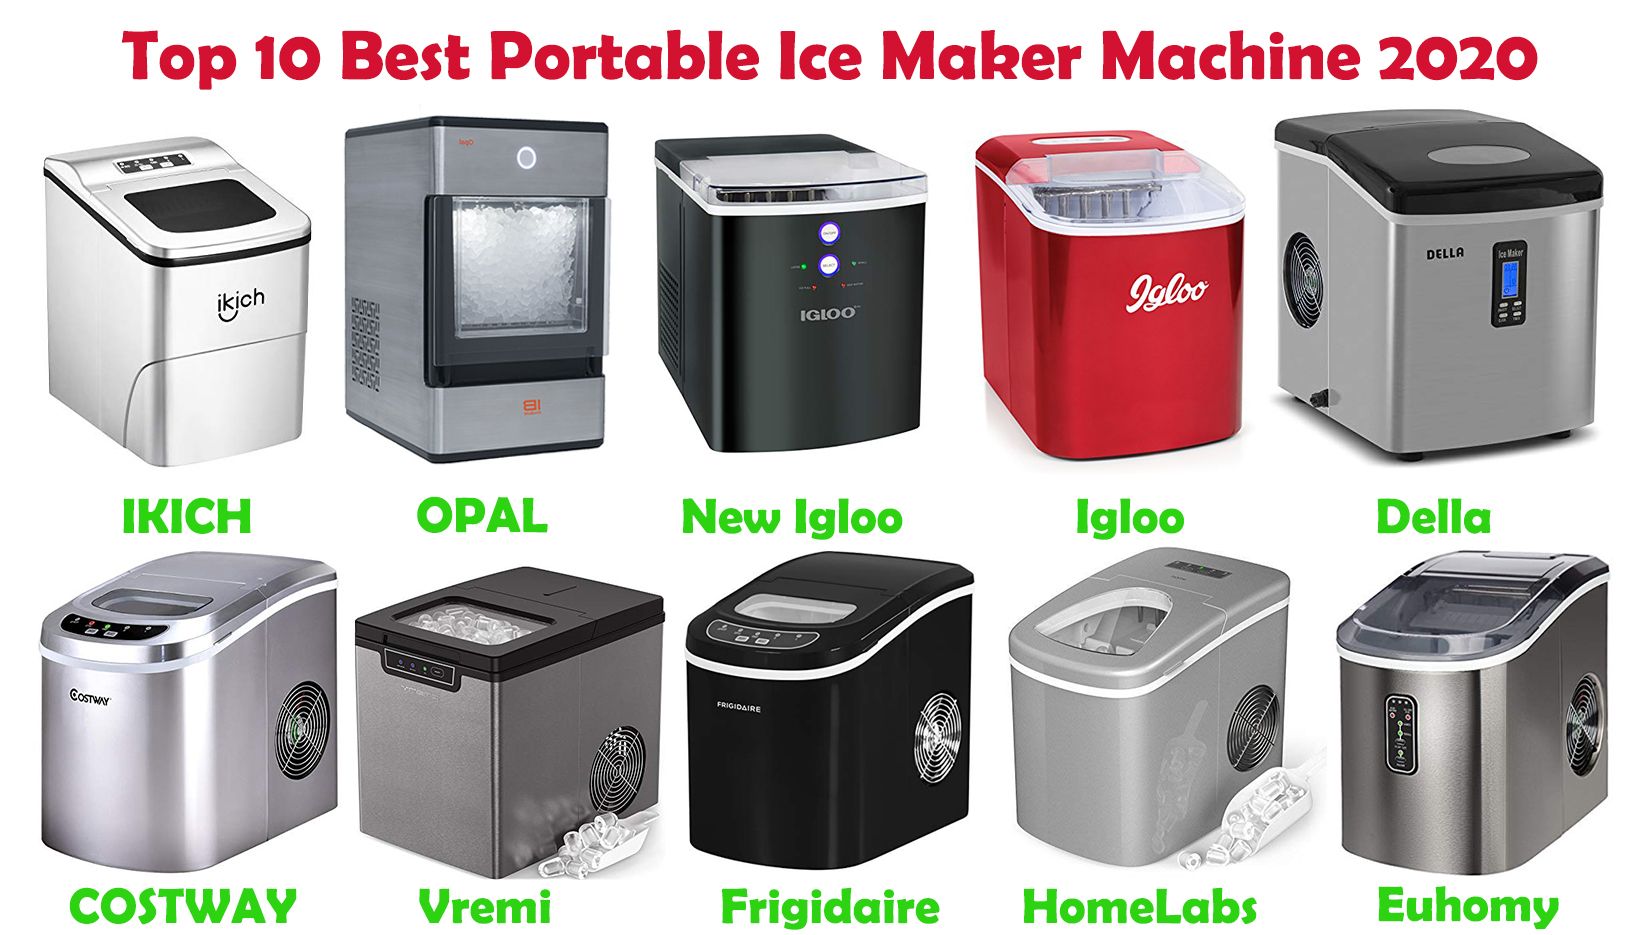 10 Best Portable Ice Maker Review & Comparison 2020 - Countertops IKICH vs HomeLabs vs Igloo vs Della vs Vremi vs Frigidaire vs Euhomy vs COSTWAY vs Opal